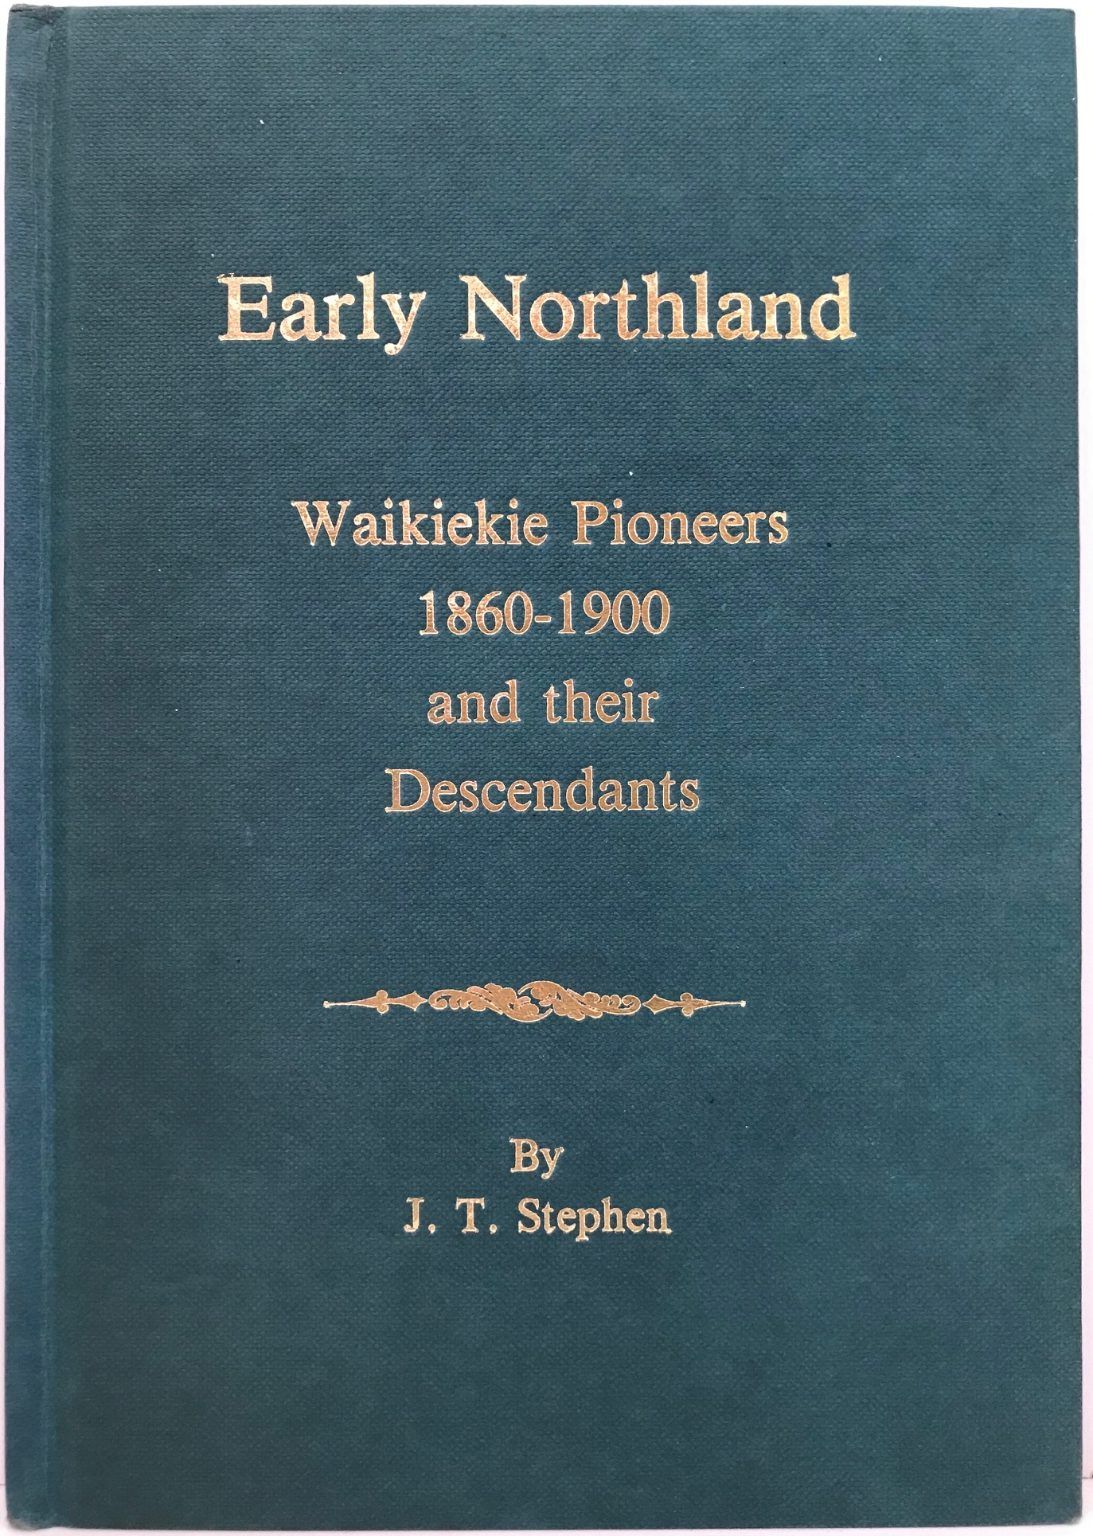 EARLY NORTHLAND: Waikiekie Pioneers 1860-1900 and their Descendants